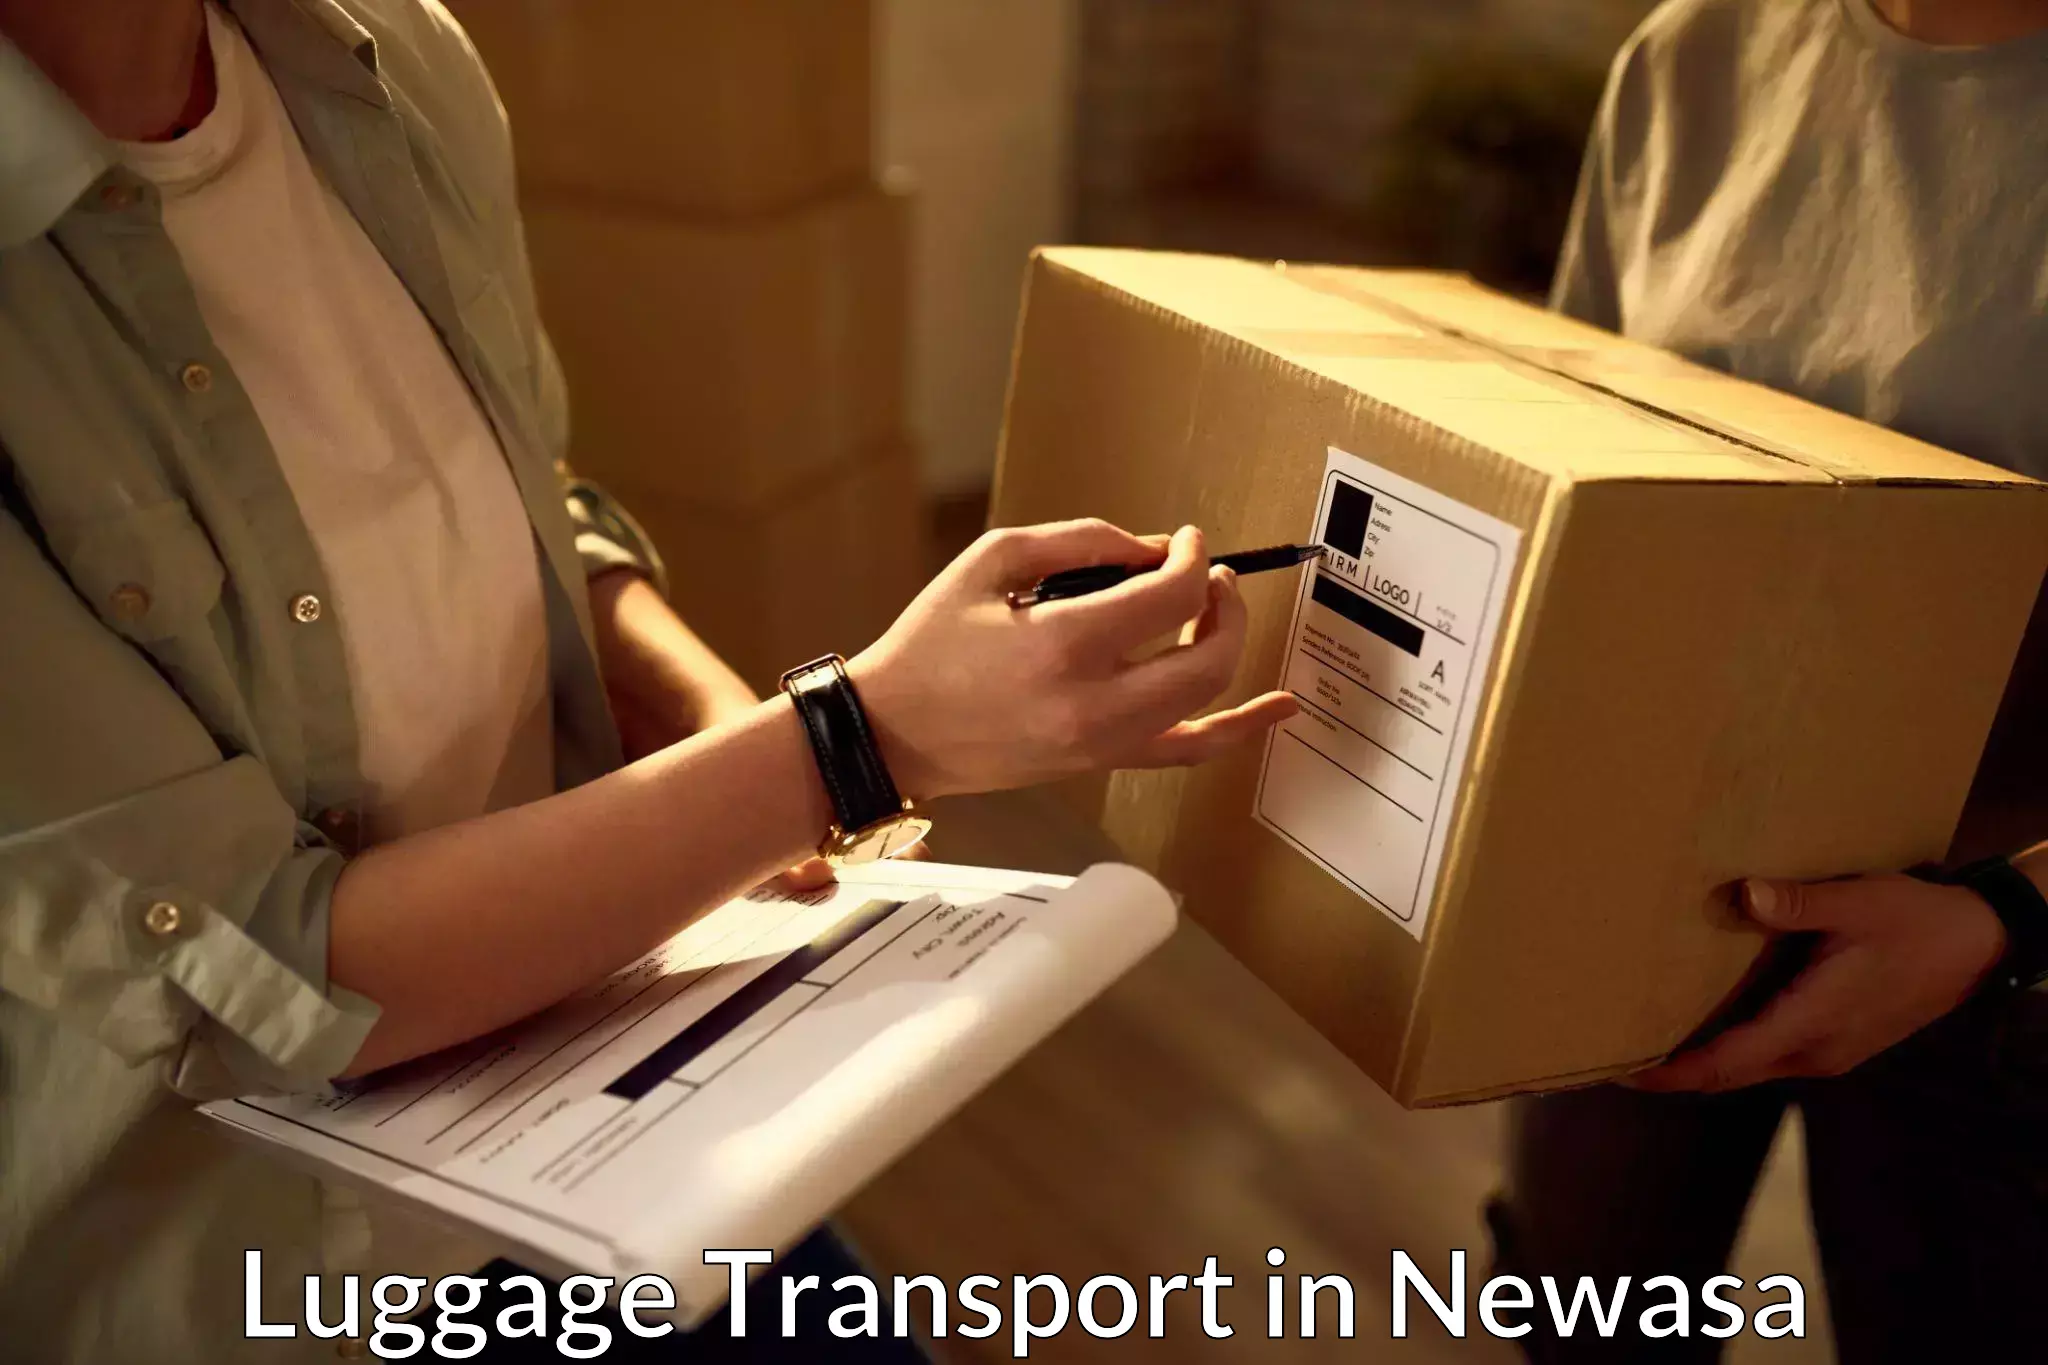 Baggage relocation service in Newasa